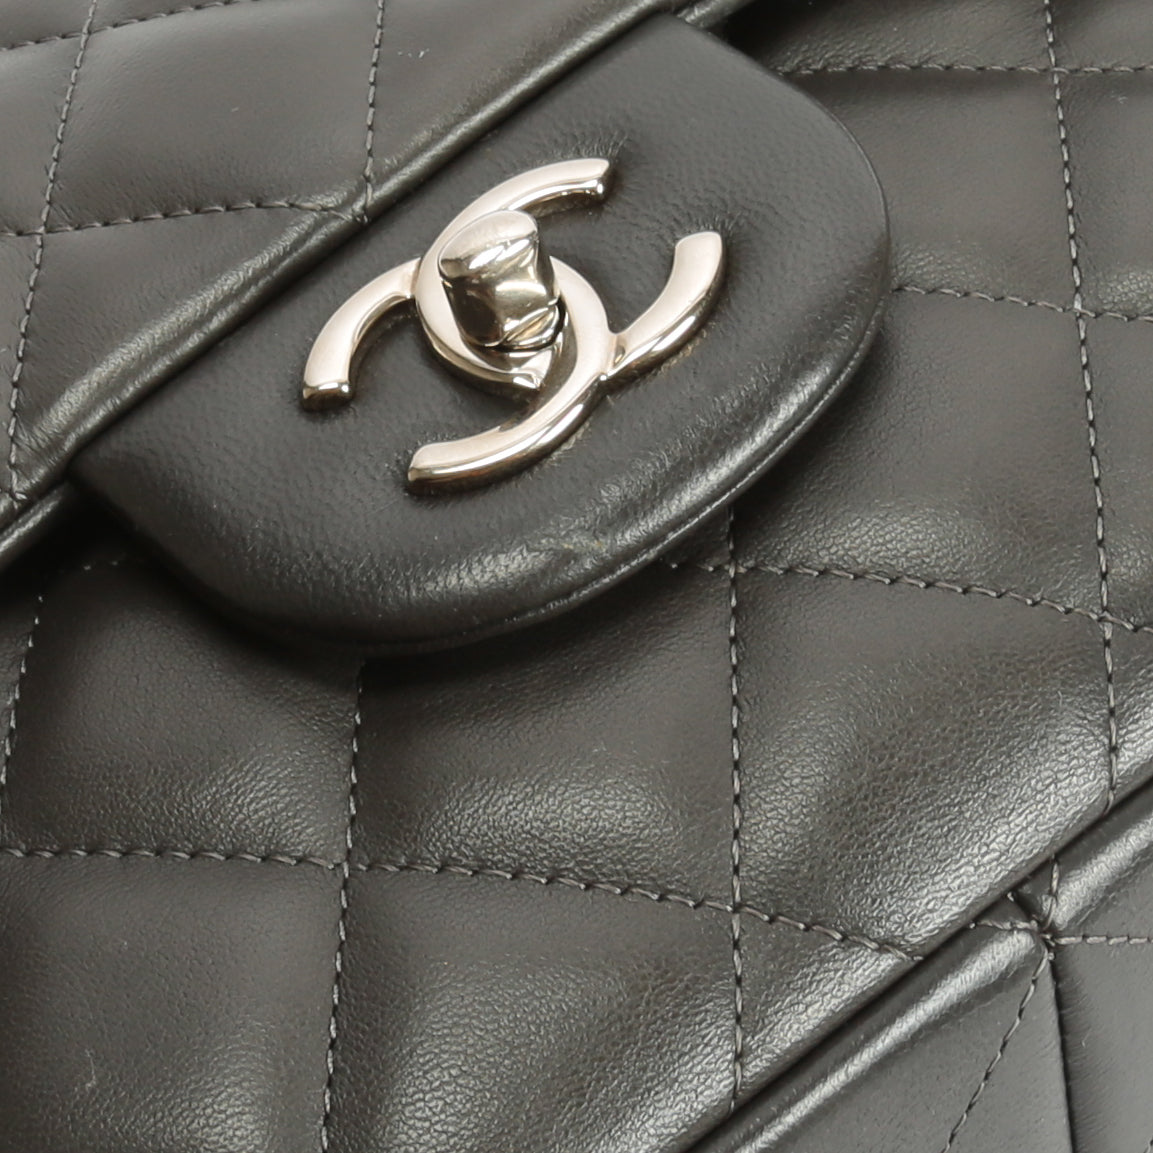 CHANEL, Bags, Brand New 223 Chanel Classic Jumbo Handbag